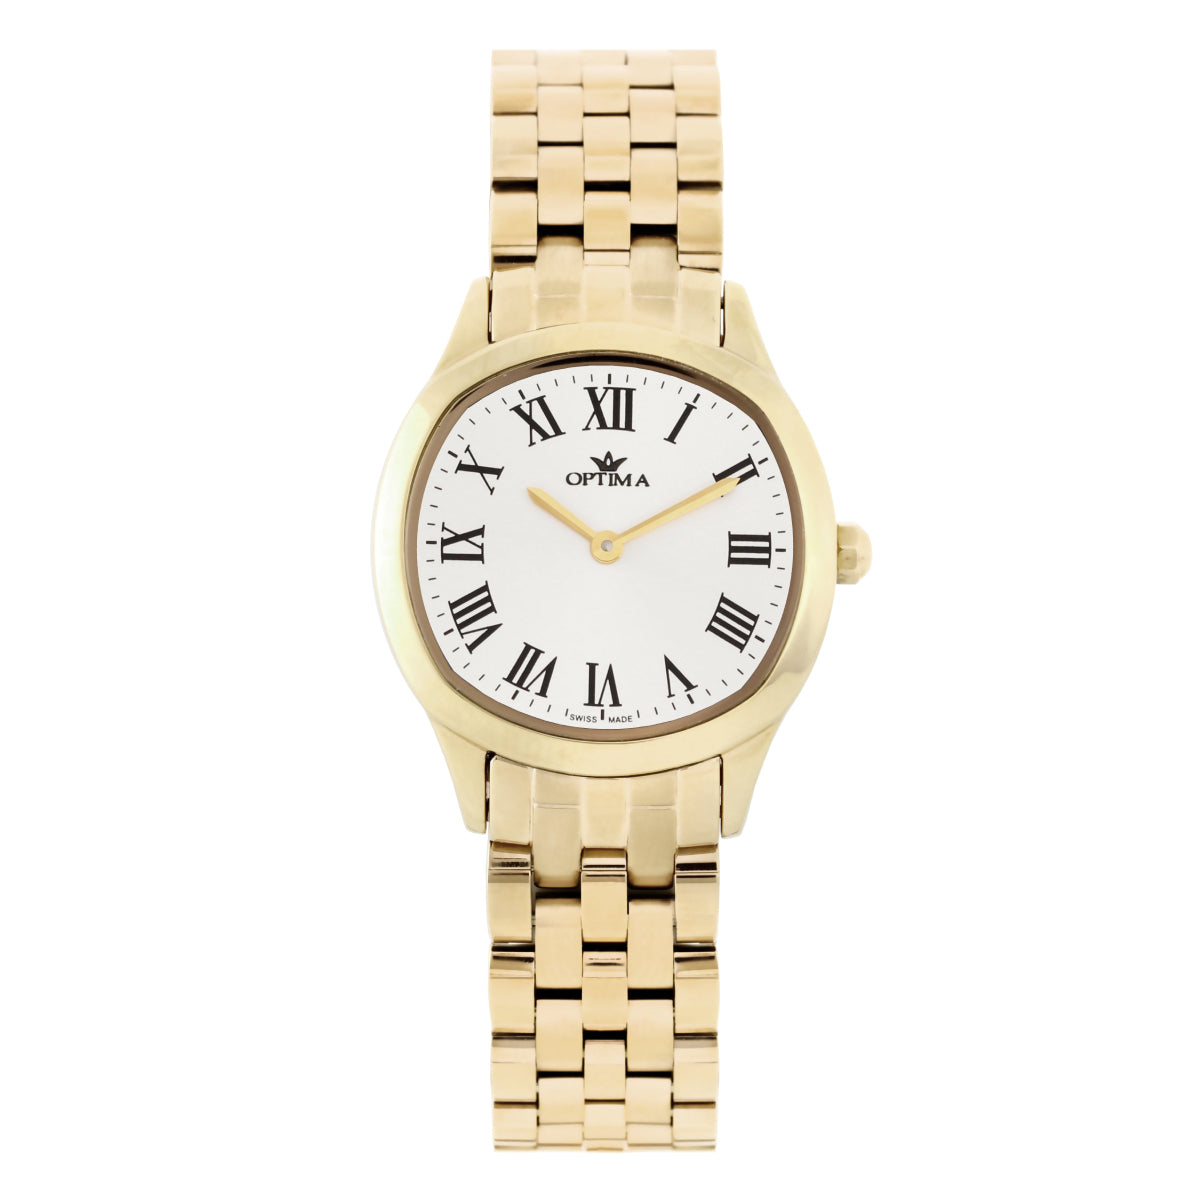 Optima Women's Swiss Quartz Watch with White Dial - OPT-0036